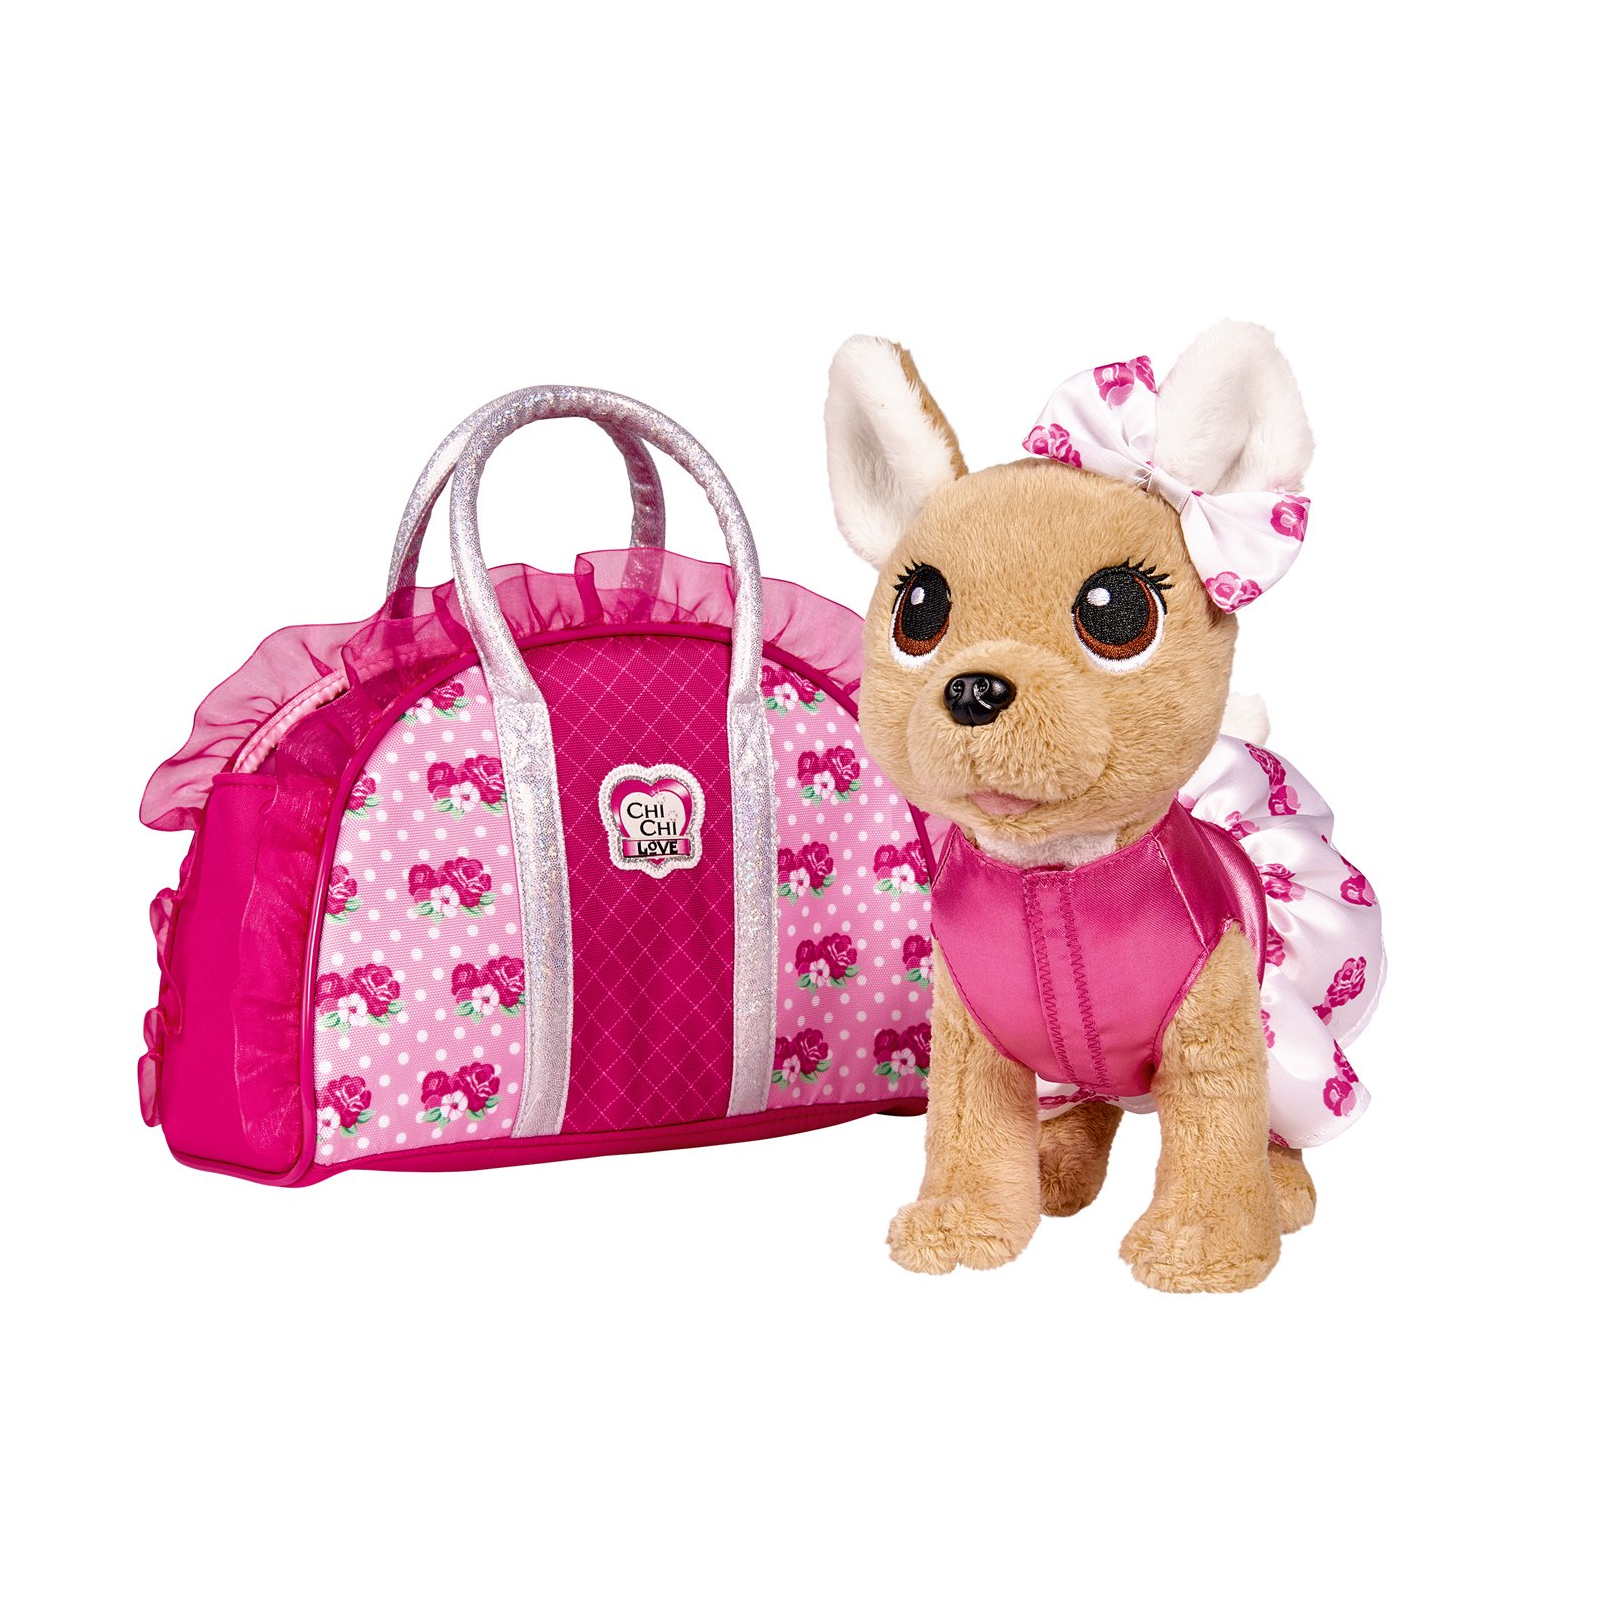 Мягкая игрушка Simba Chi Chi Love Чихуахуа Розовая мода с сумочкой (5893346)